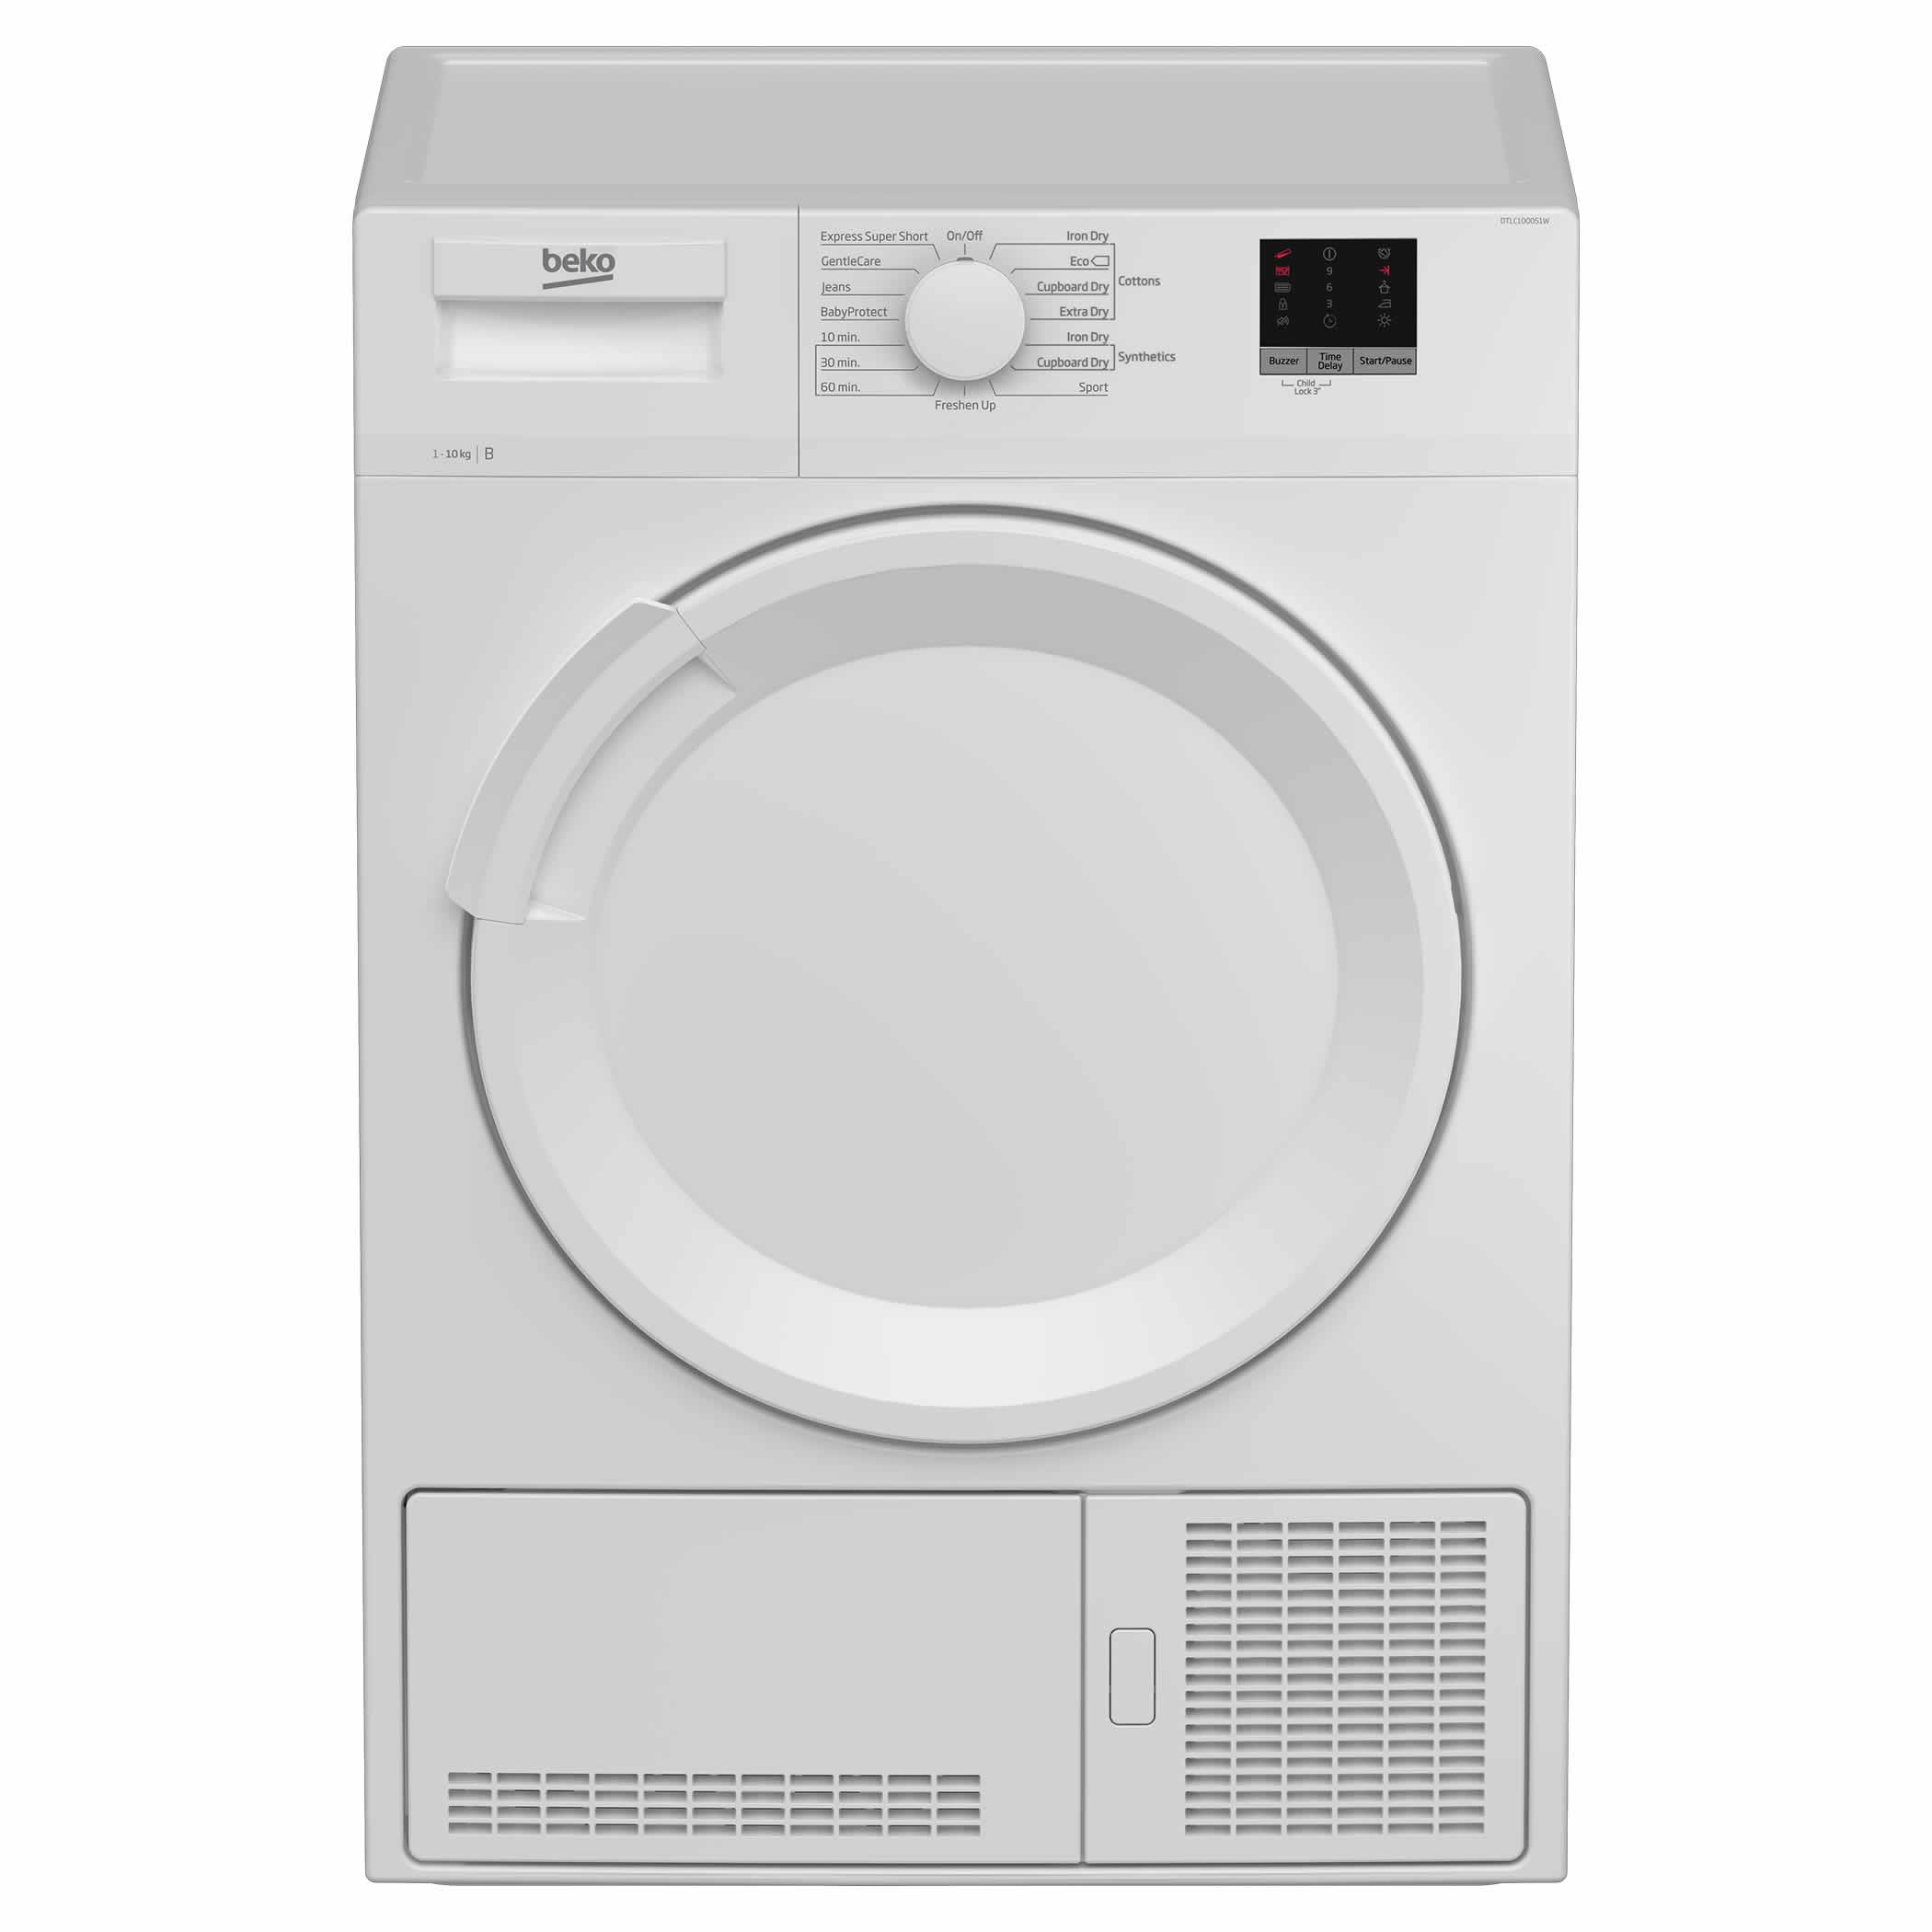 Beko DTLC100051W 10Kg Condenser Tumble Dryer - White - B Rated